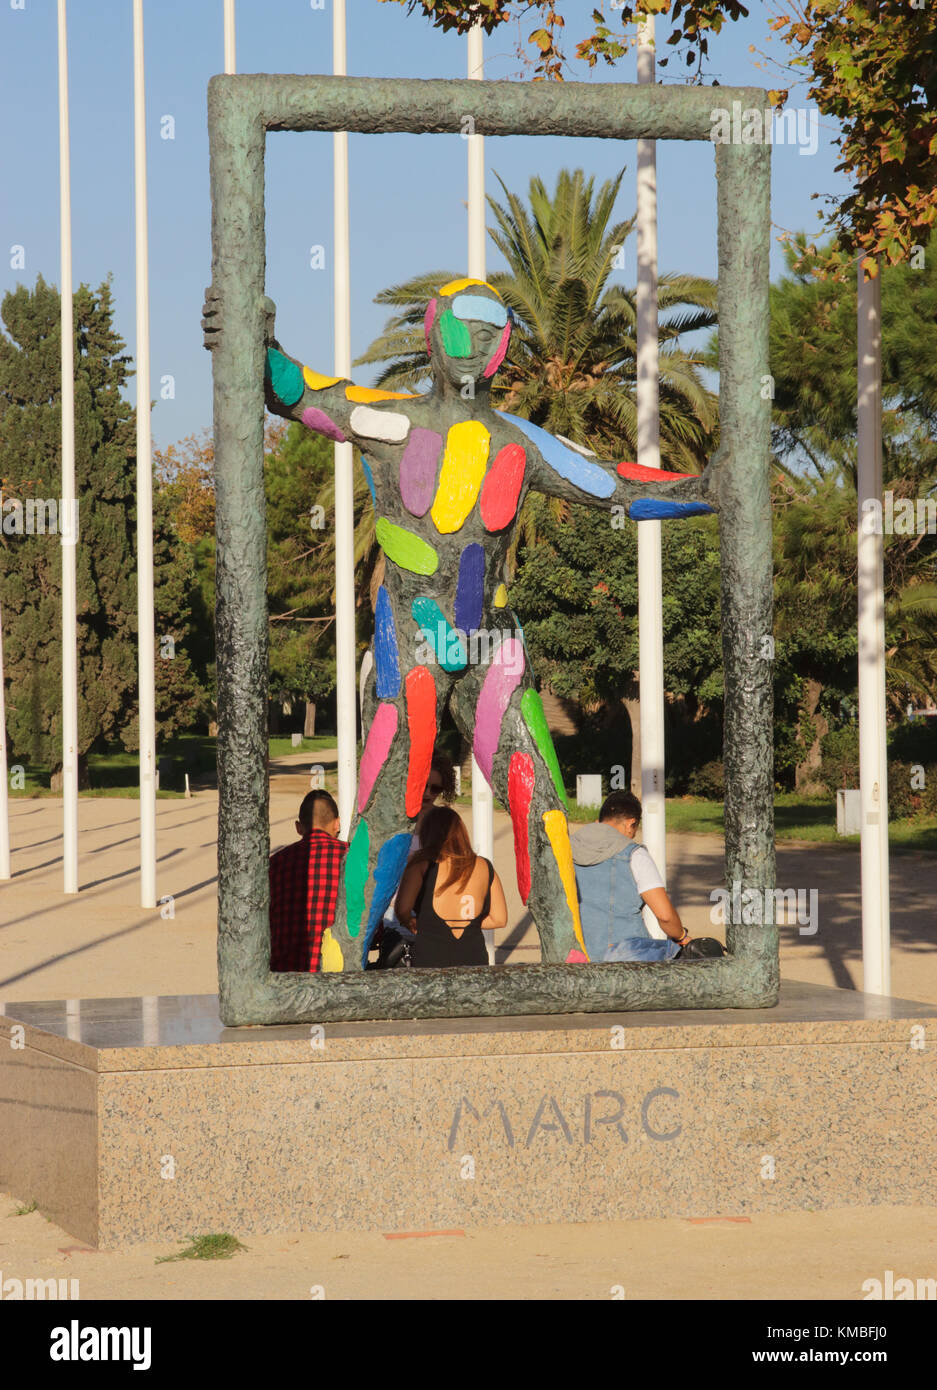 Marc sculpture by Robert Llimos Parc del Port Olimpic Barcelona Spain Stock Photo